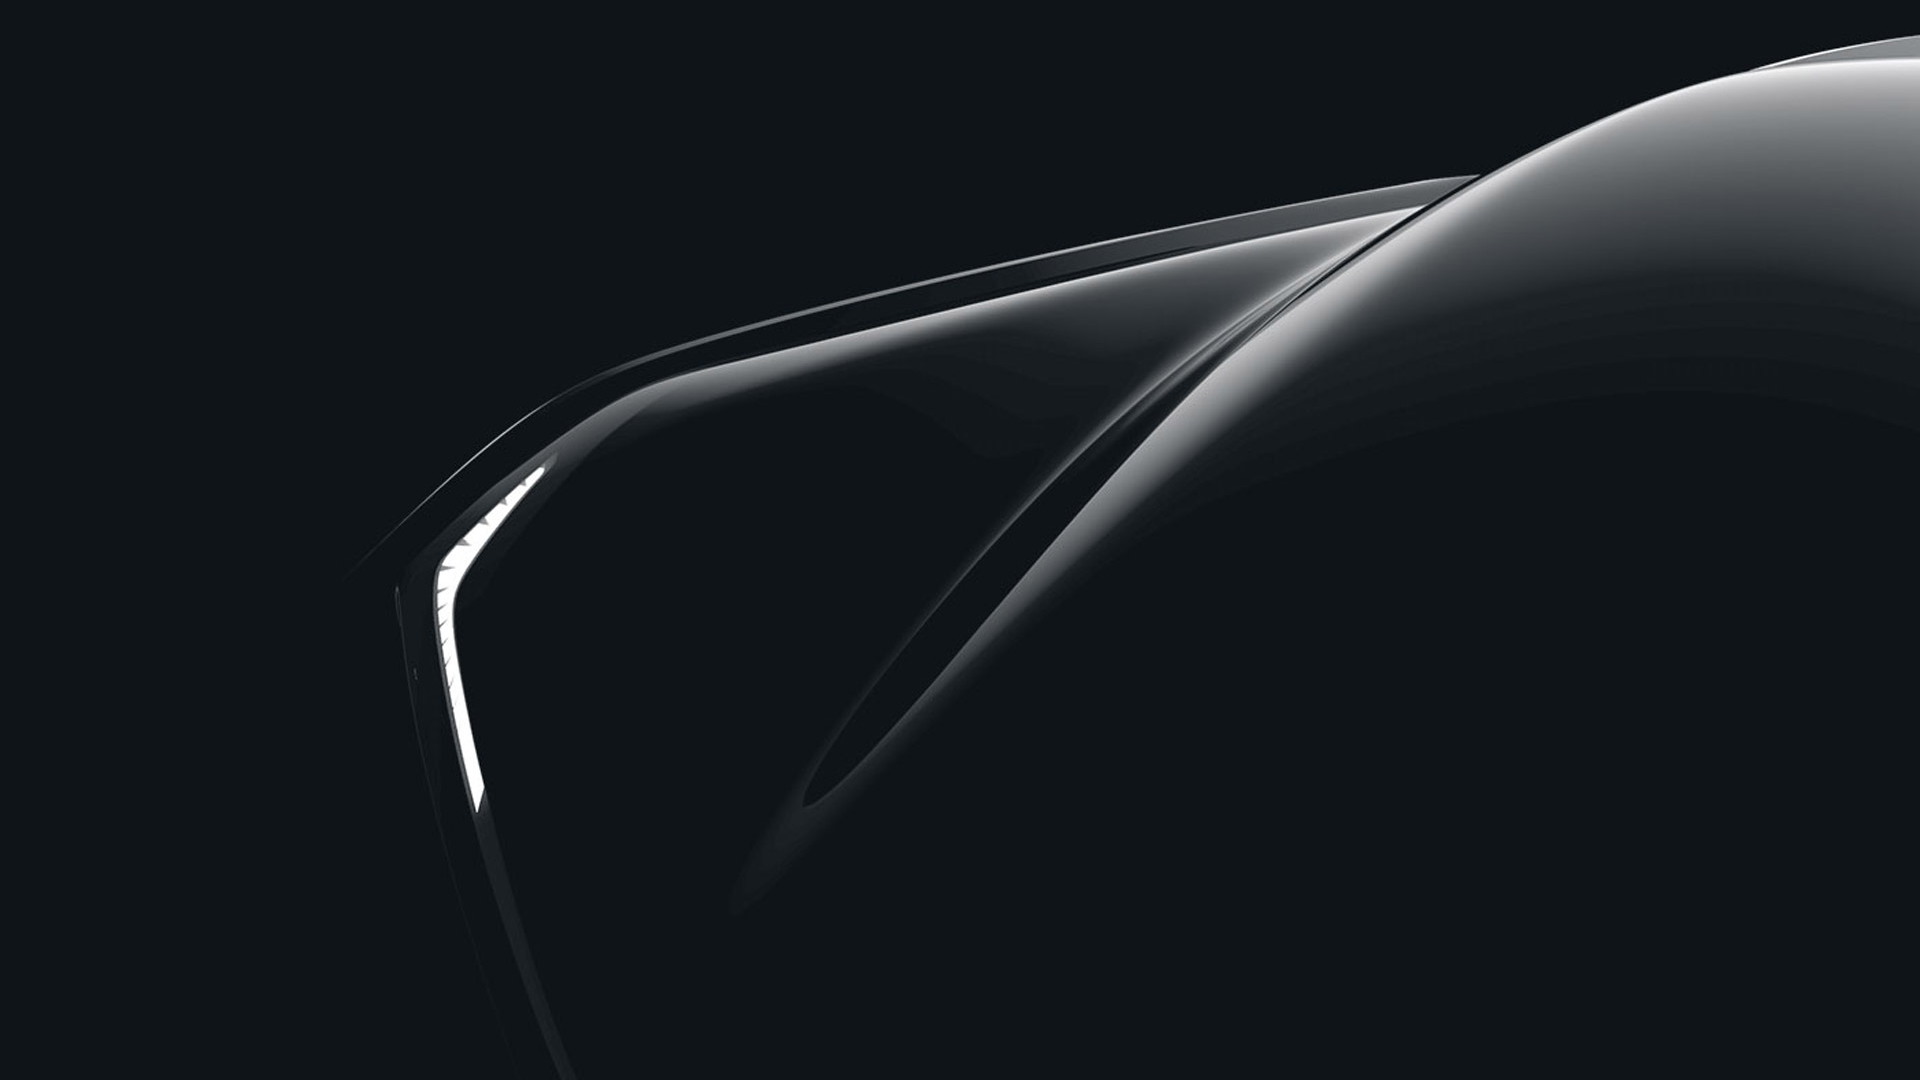 Teaser for Faraday Future concept car debuting at 2016 Consumer Electronics Show